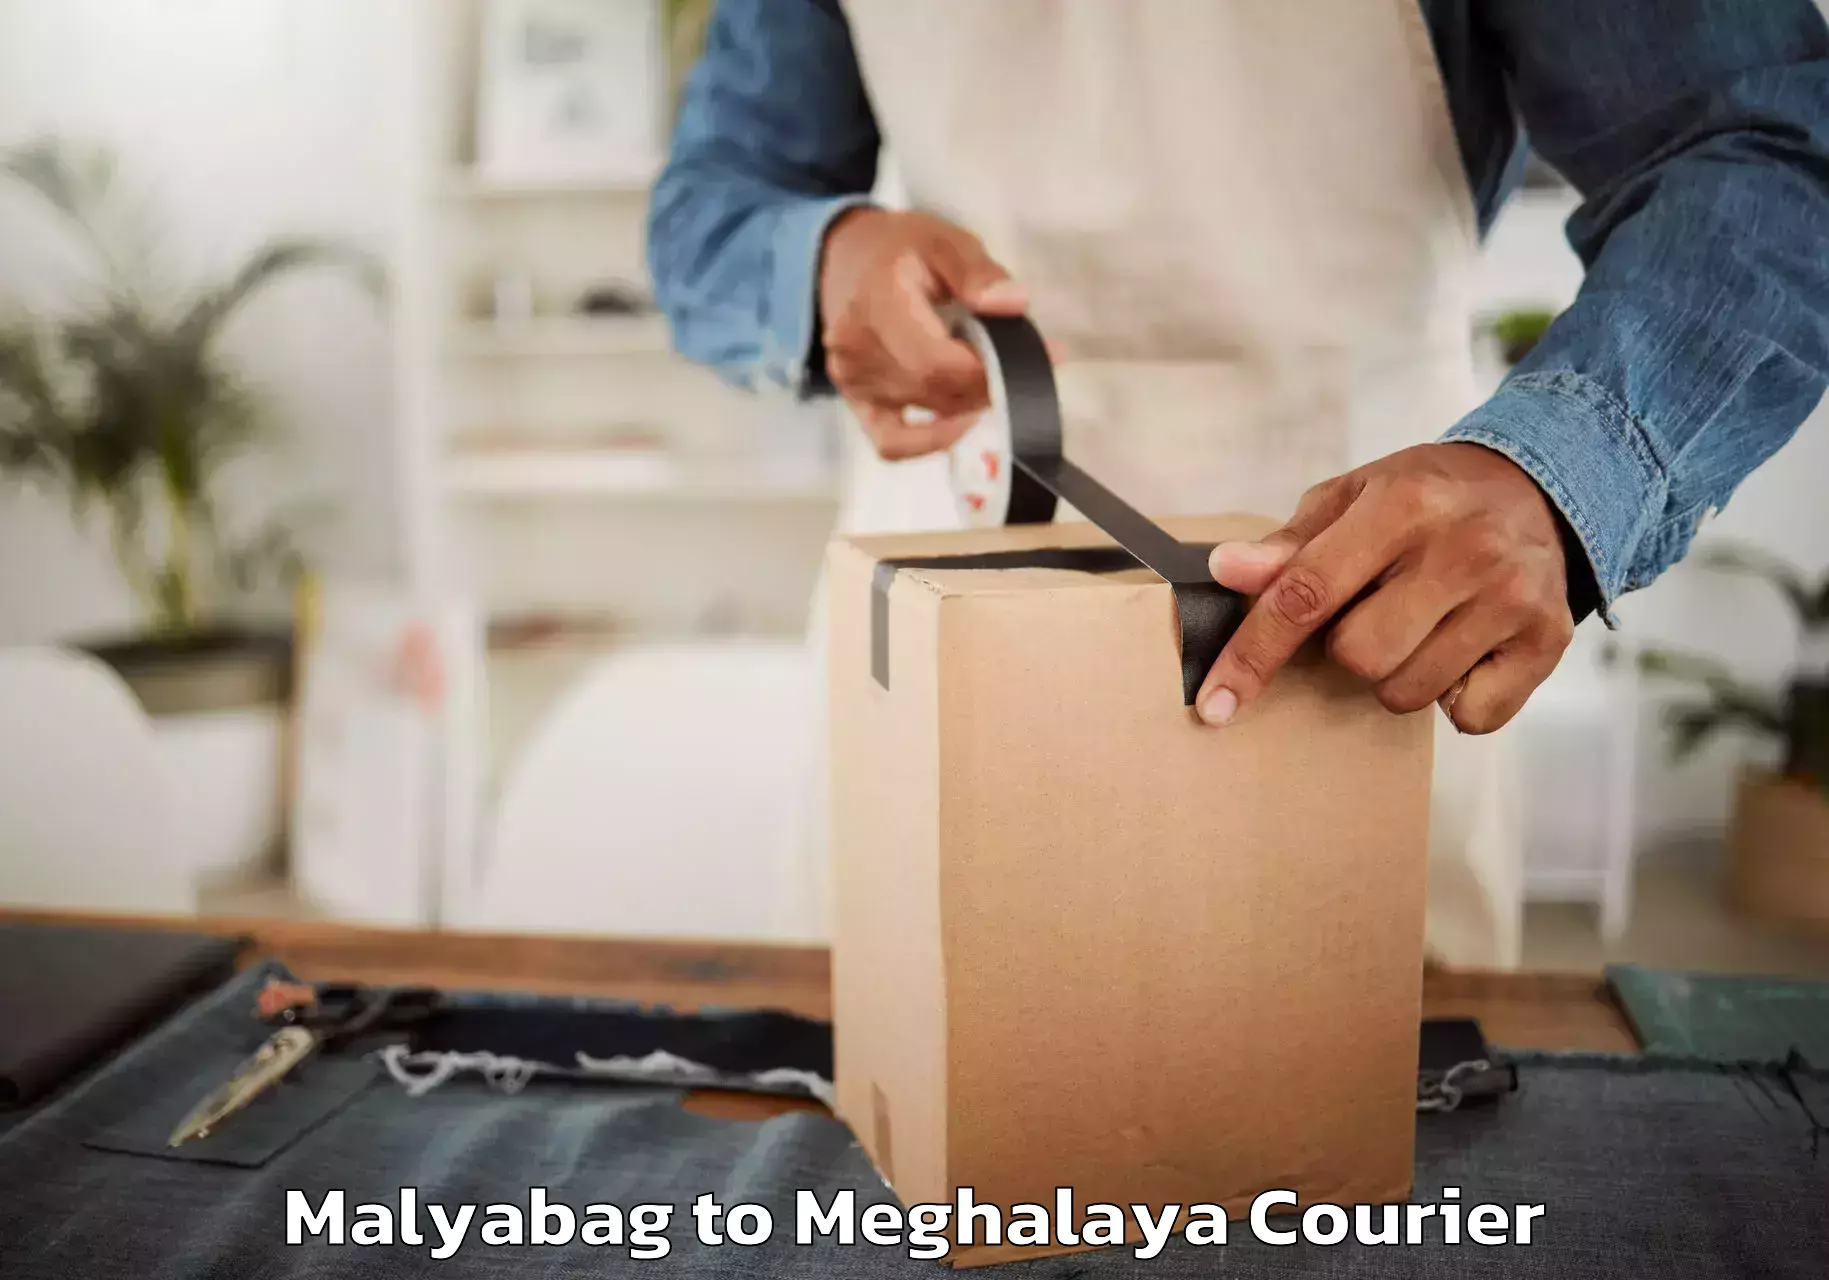 Furniture transport service Malyabag to Shillong